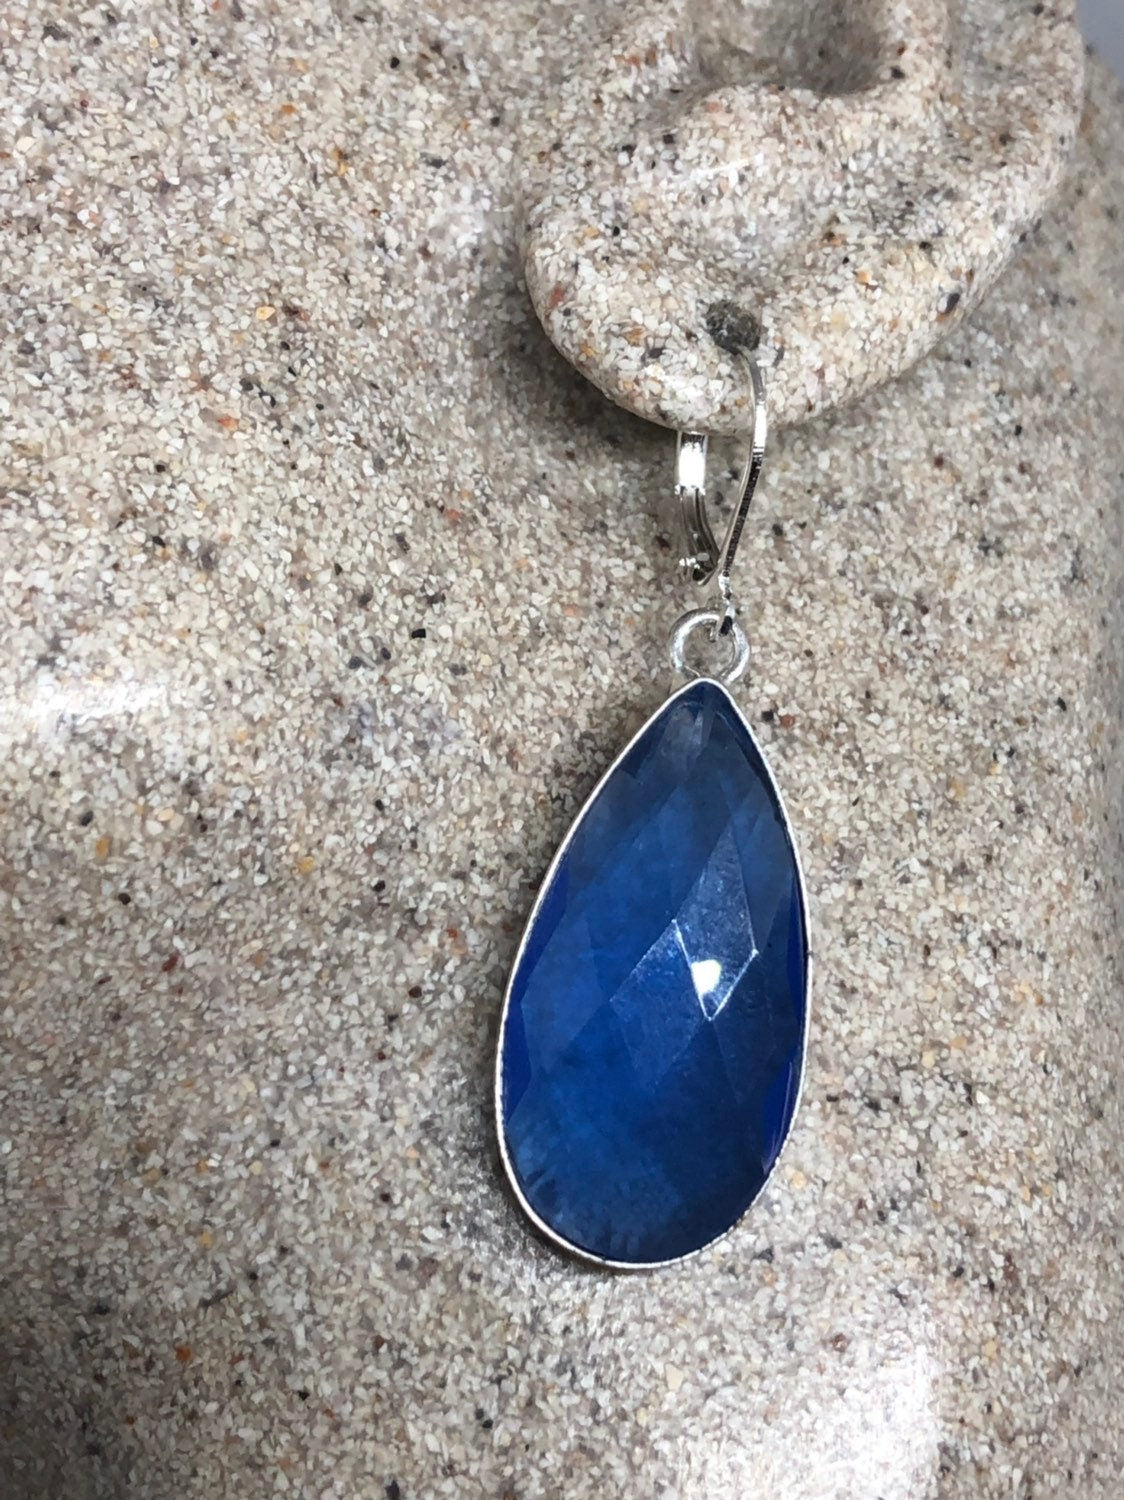 Antique Vintage Cobalt Blue Volcanic Glass Silver Dangle Earrings